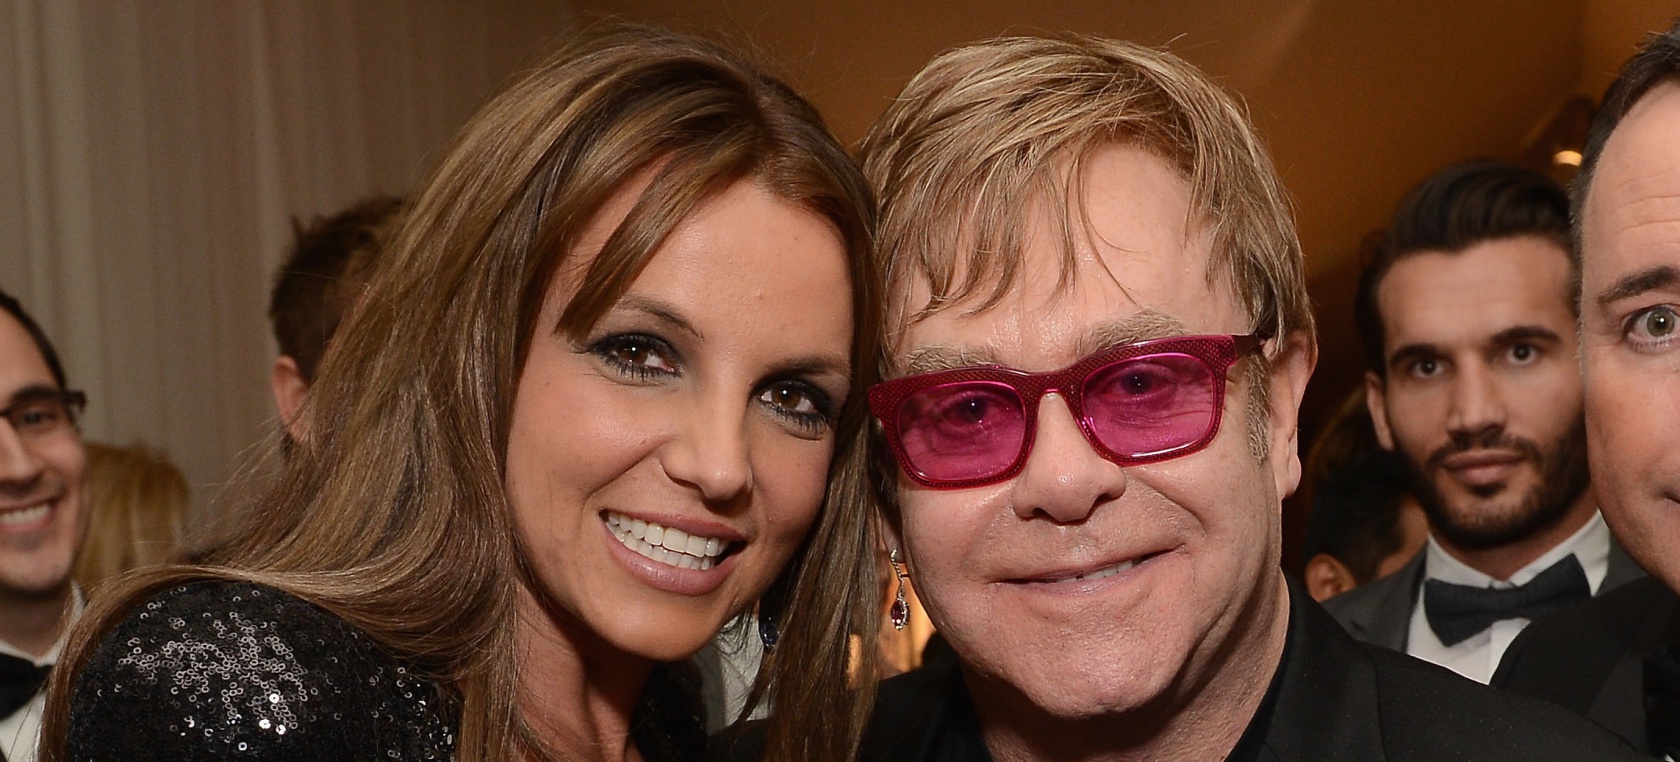 Elton John aparece en un bar de Francia para cantar en directo su canción con Britney Spears